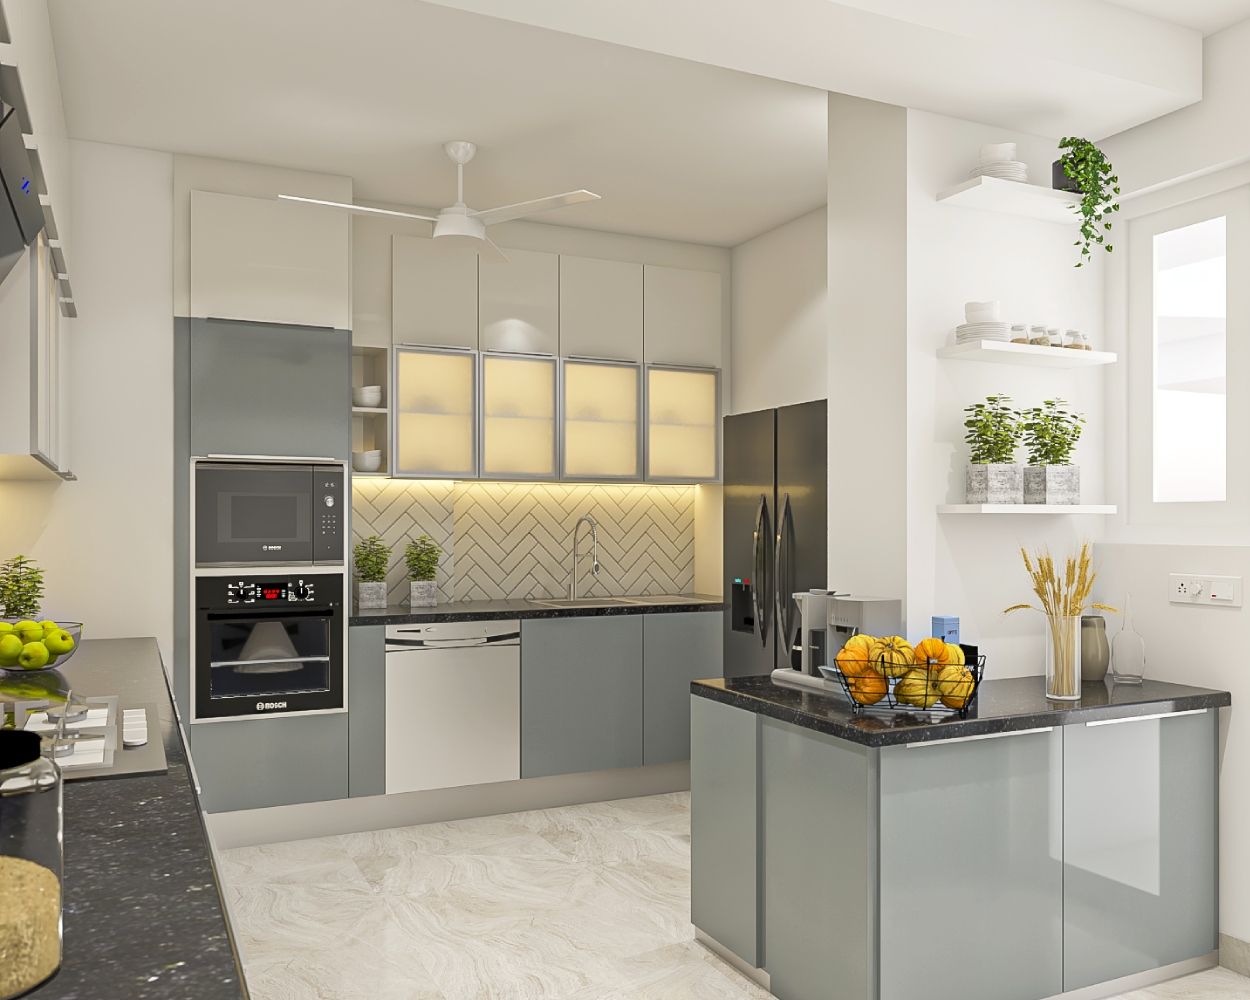 Modern Kitchen Design With Open Wall Shelves